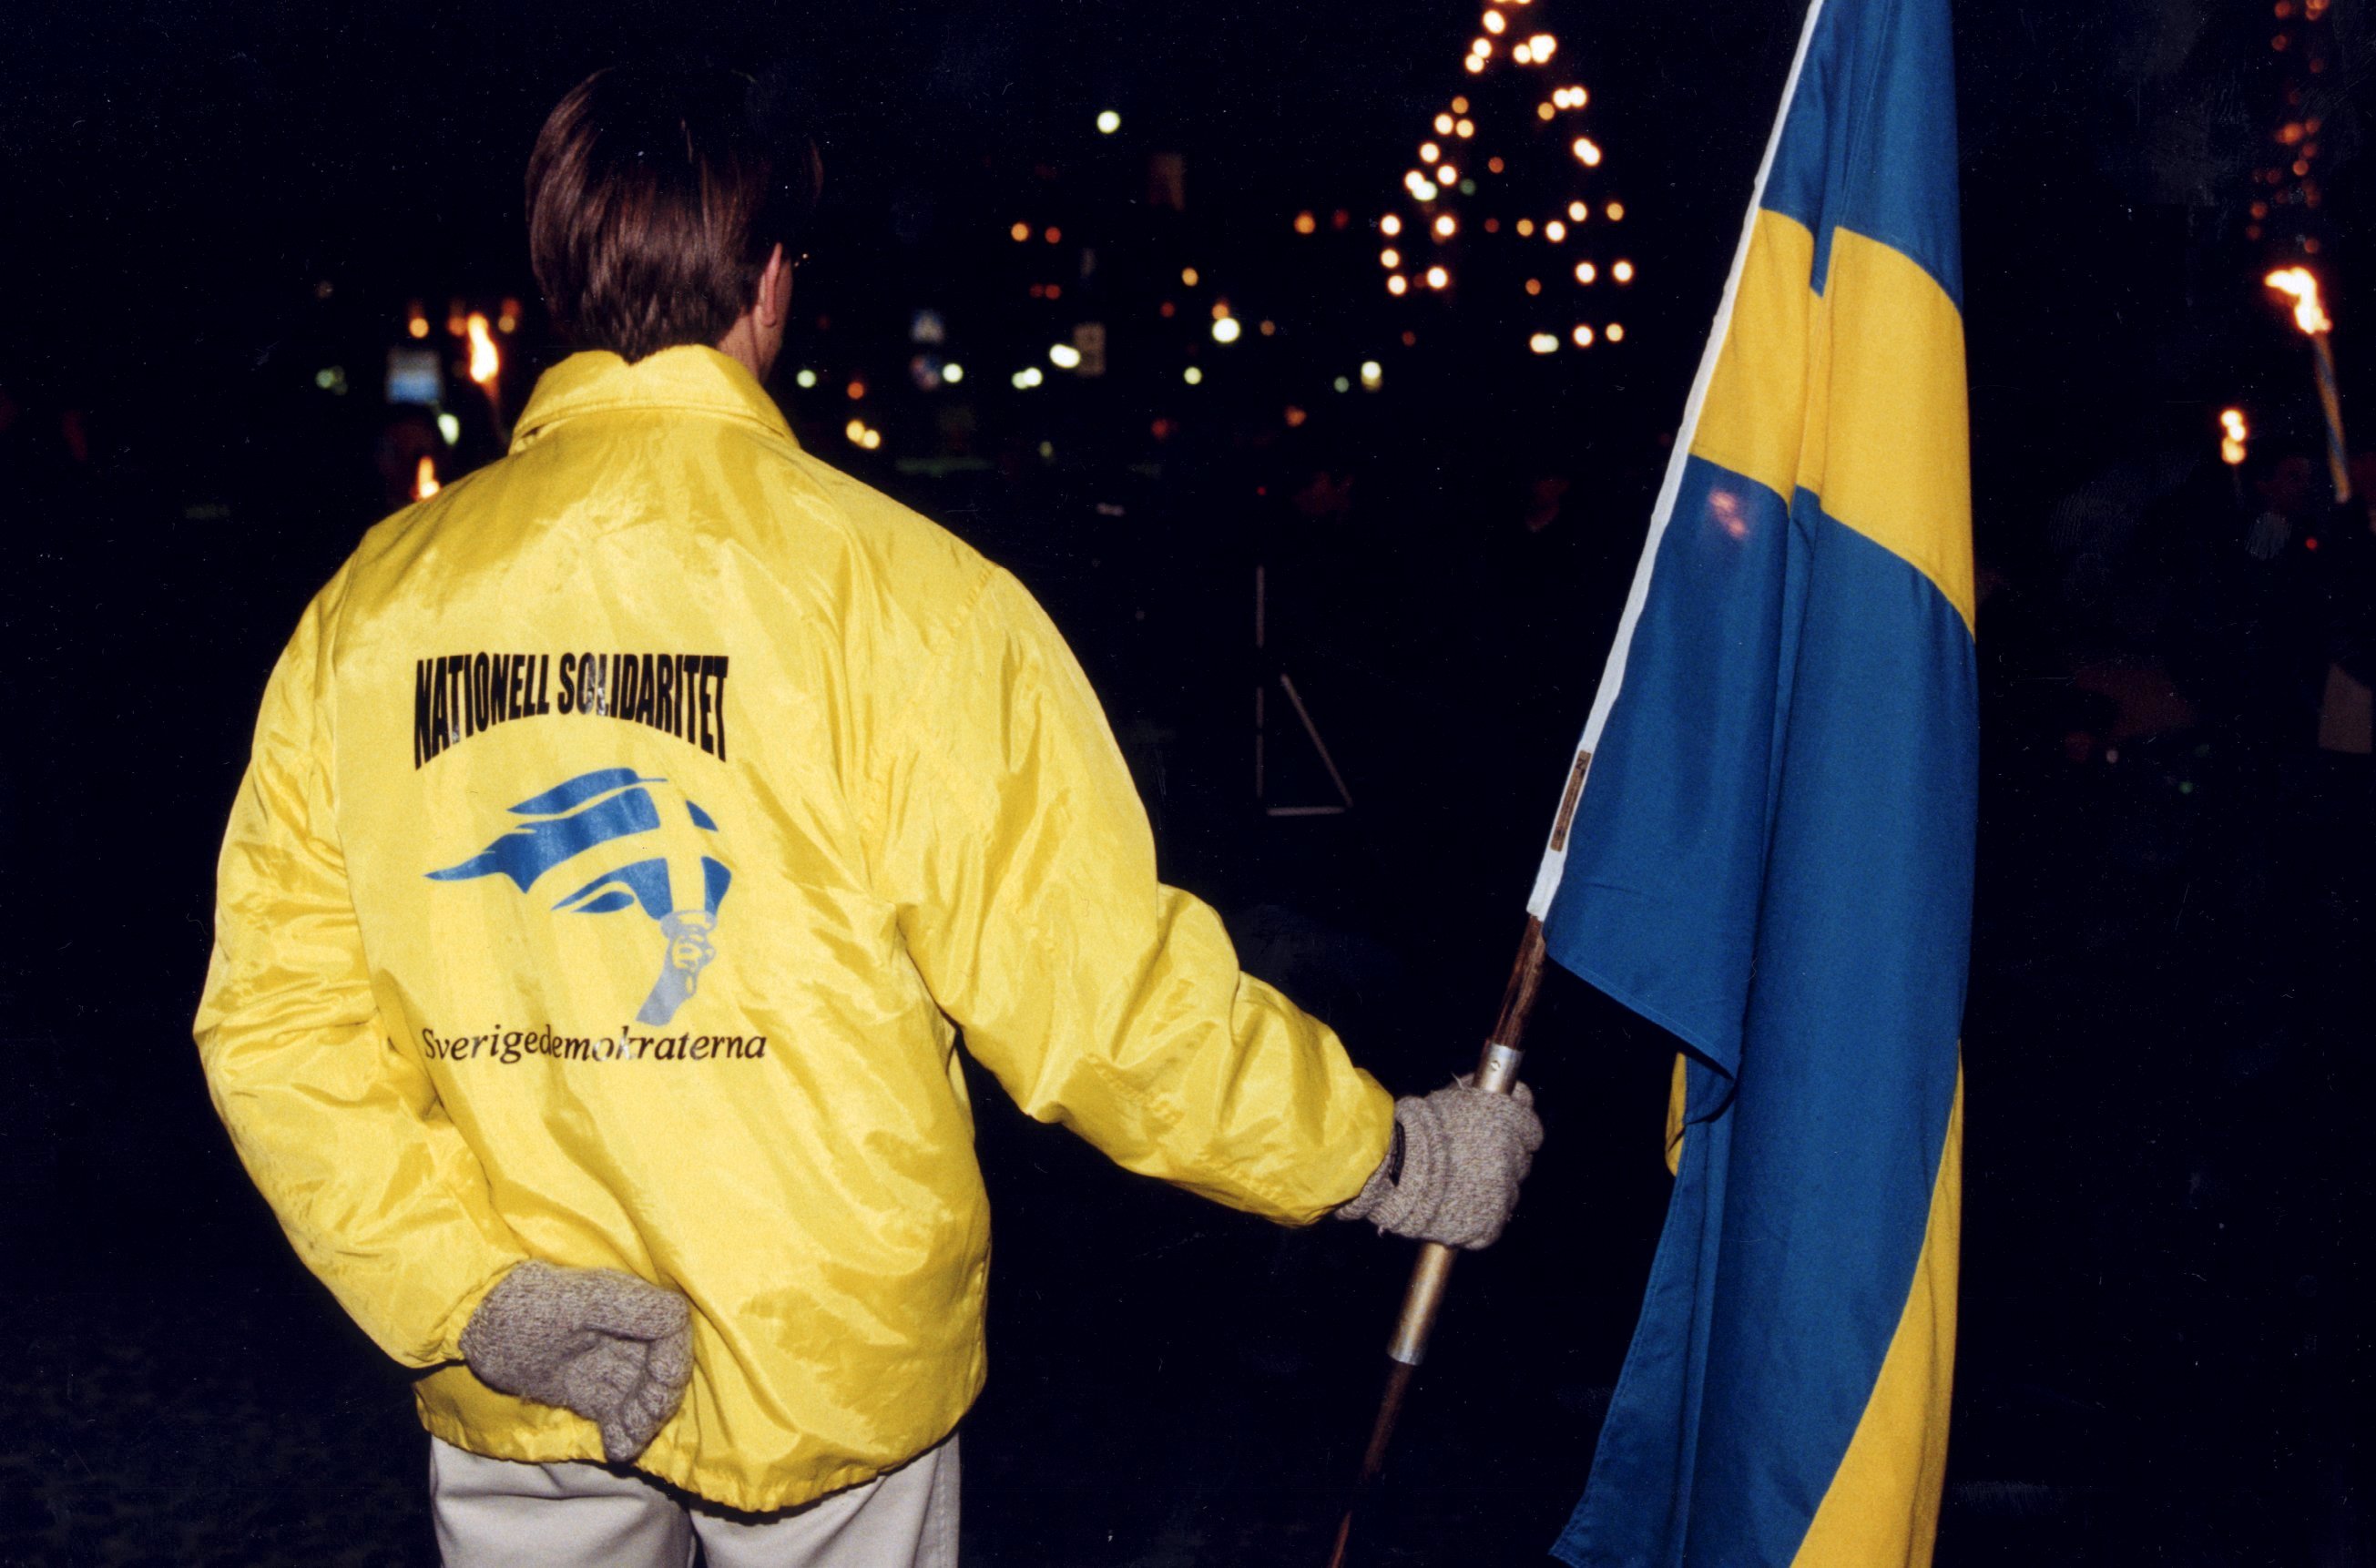 Stureplan, Riksdagsvalet 2010, gatuvåld, Sverigedemokraterna